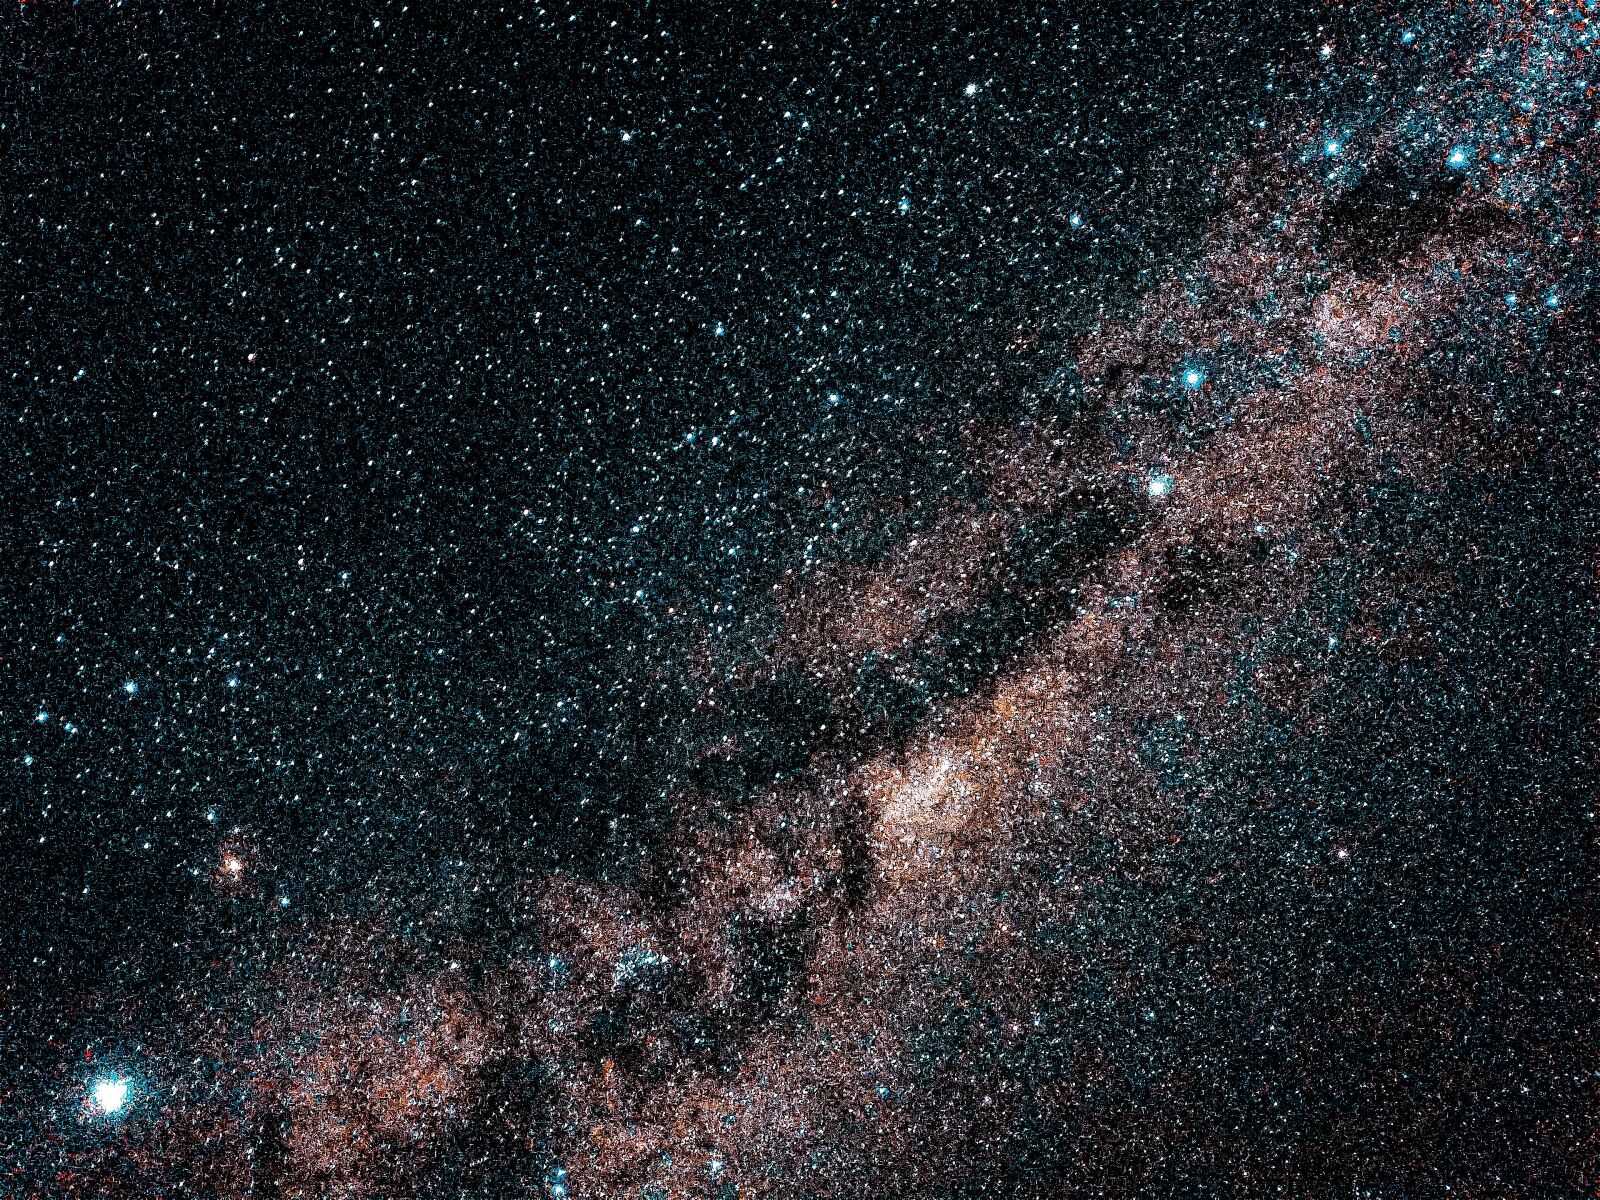 LG G6 sample photo. Galaxy, star, milky way photography